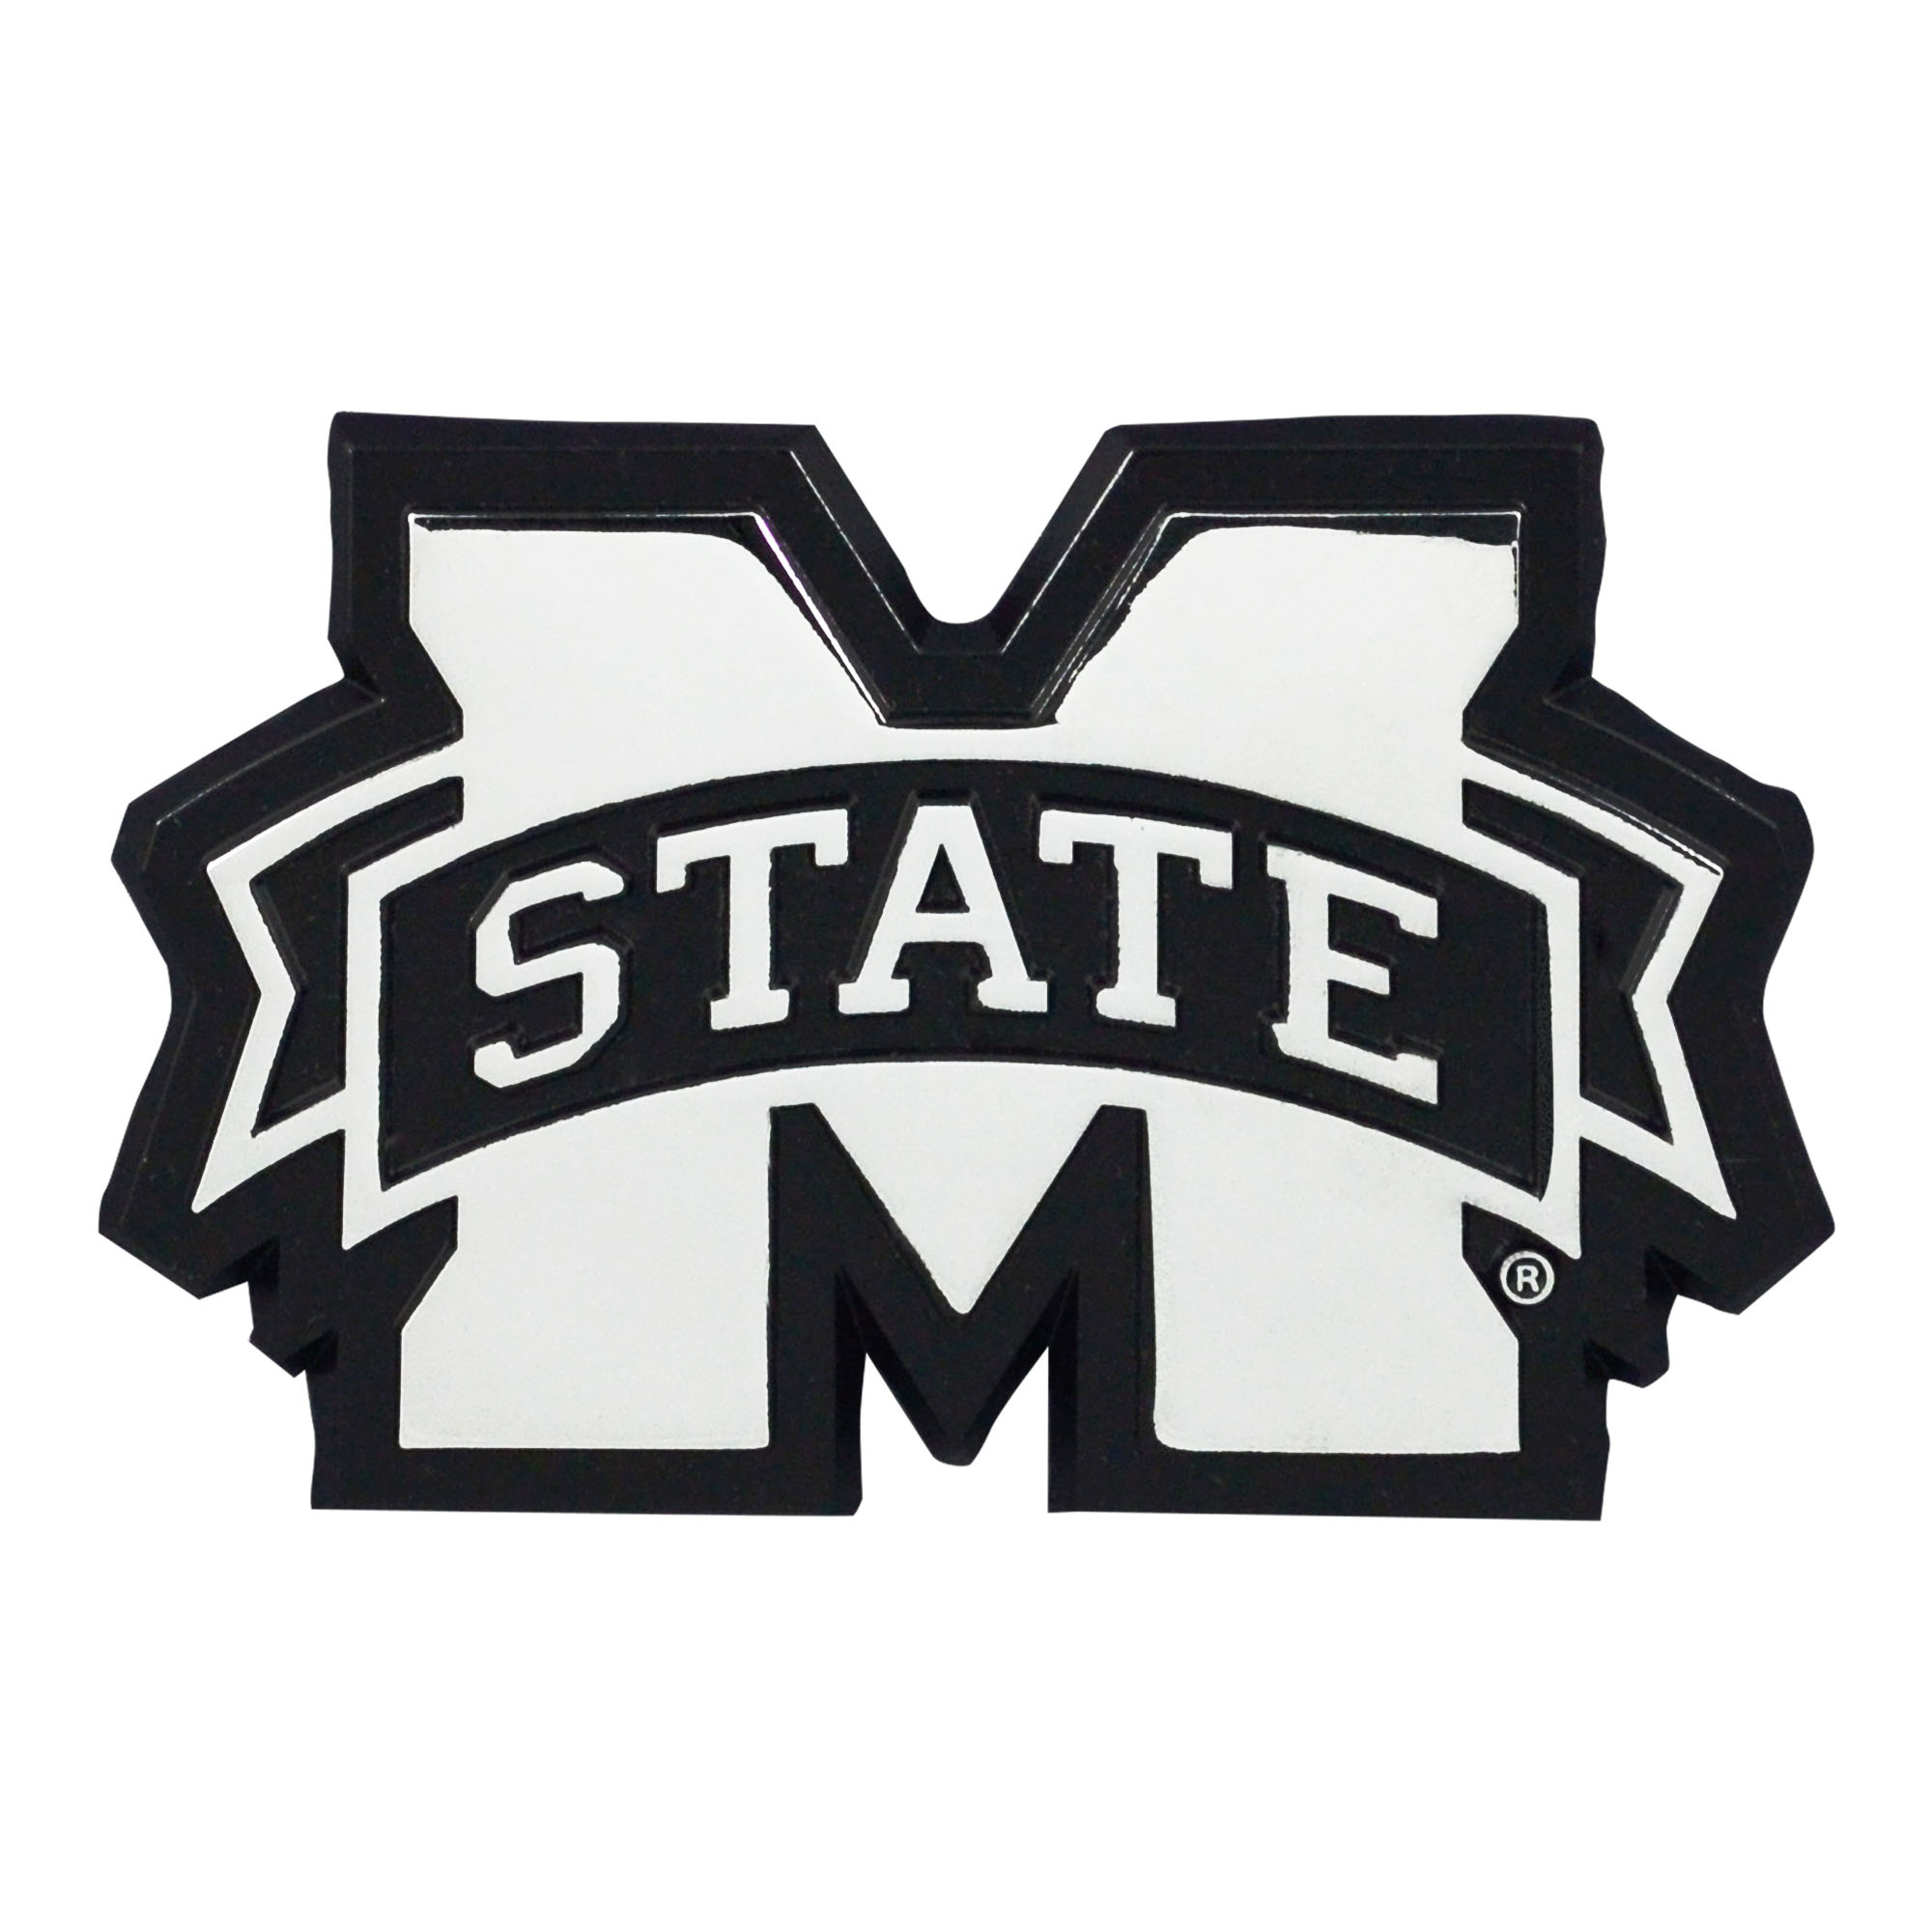 Mississippi State Bulldogs Auto Emblem Premium Metal Chrome Special Order